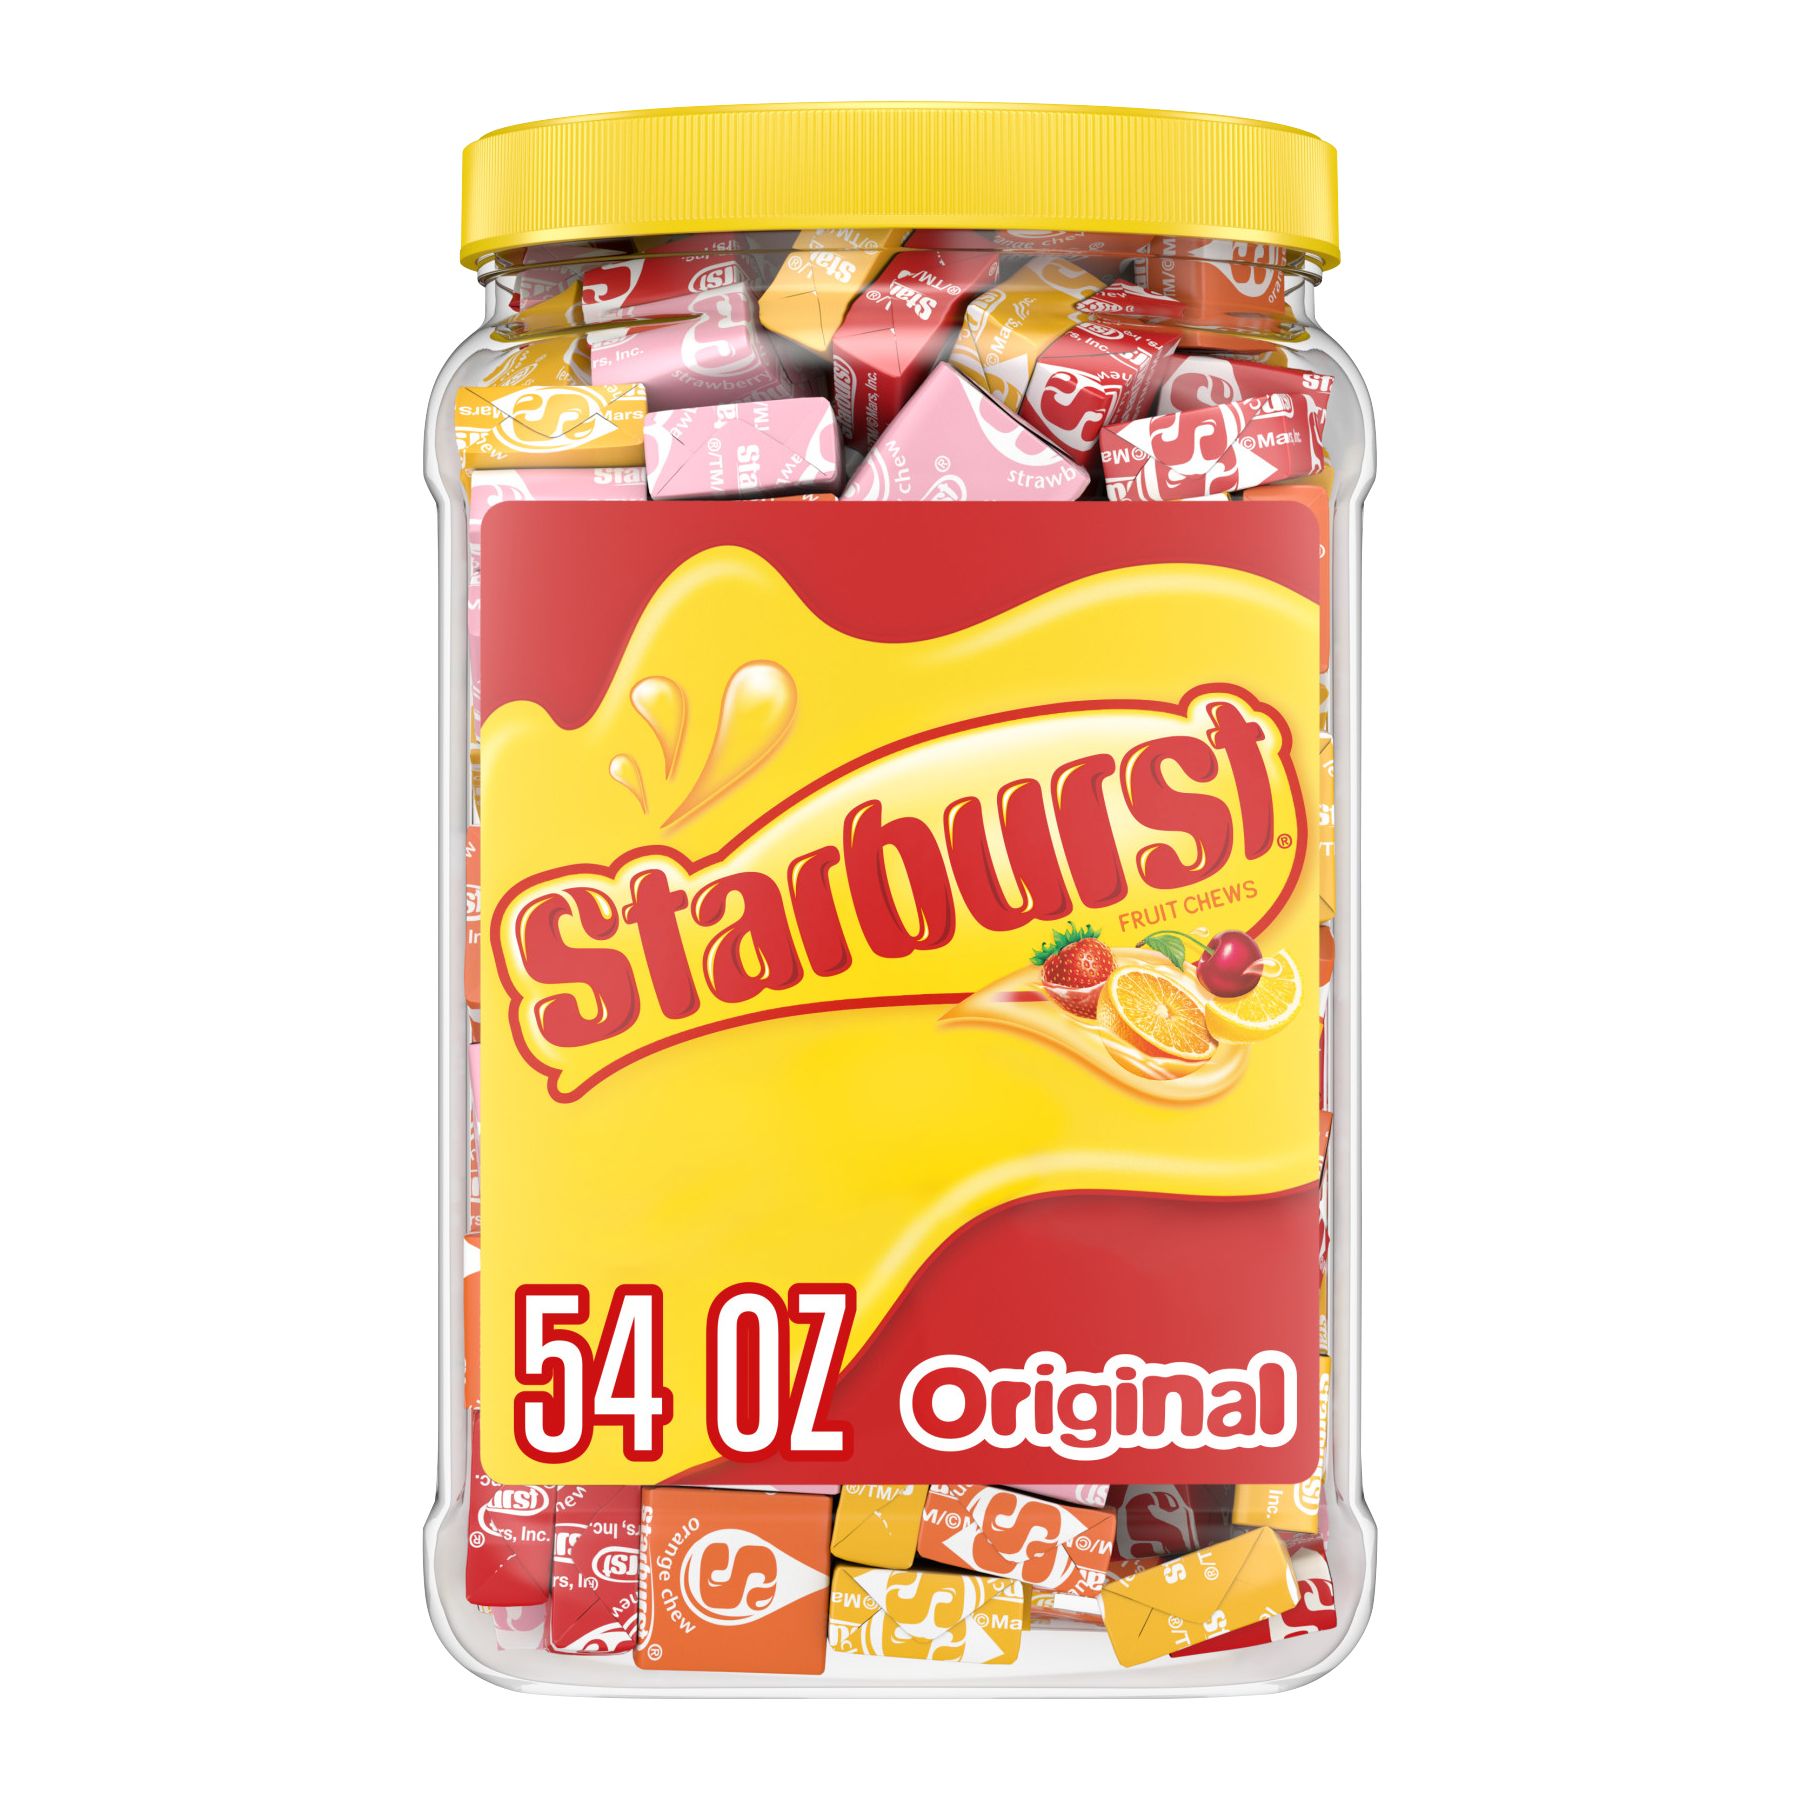 Starburst Original Fruit Chew Candy Jar Bjs Wholesale Club